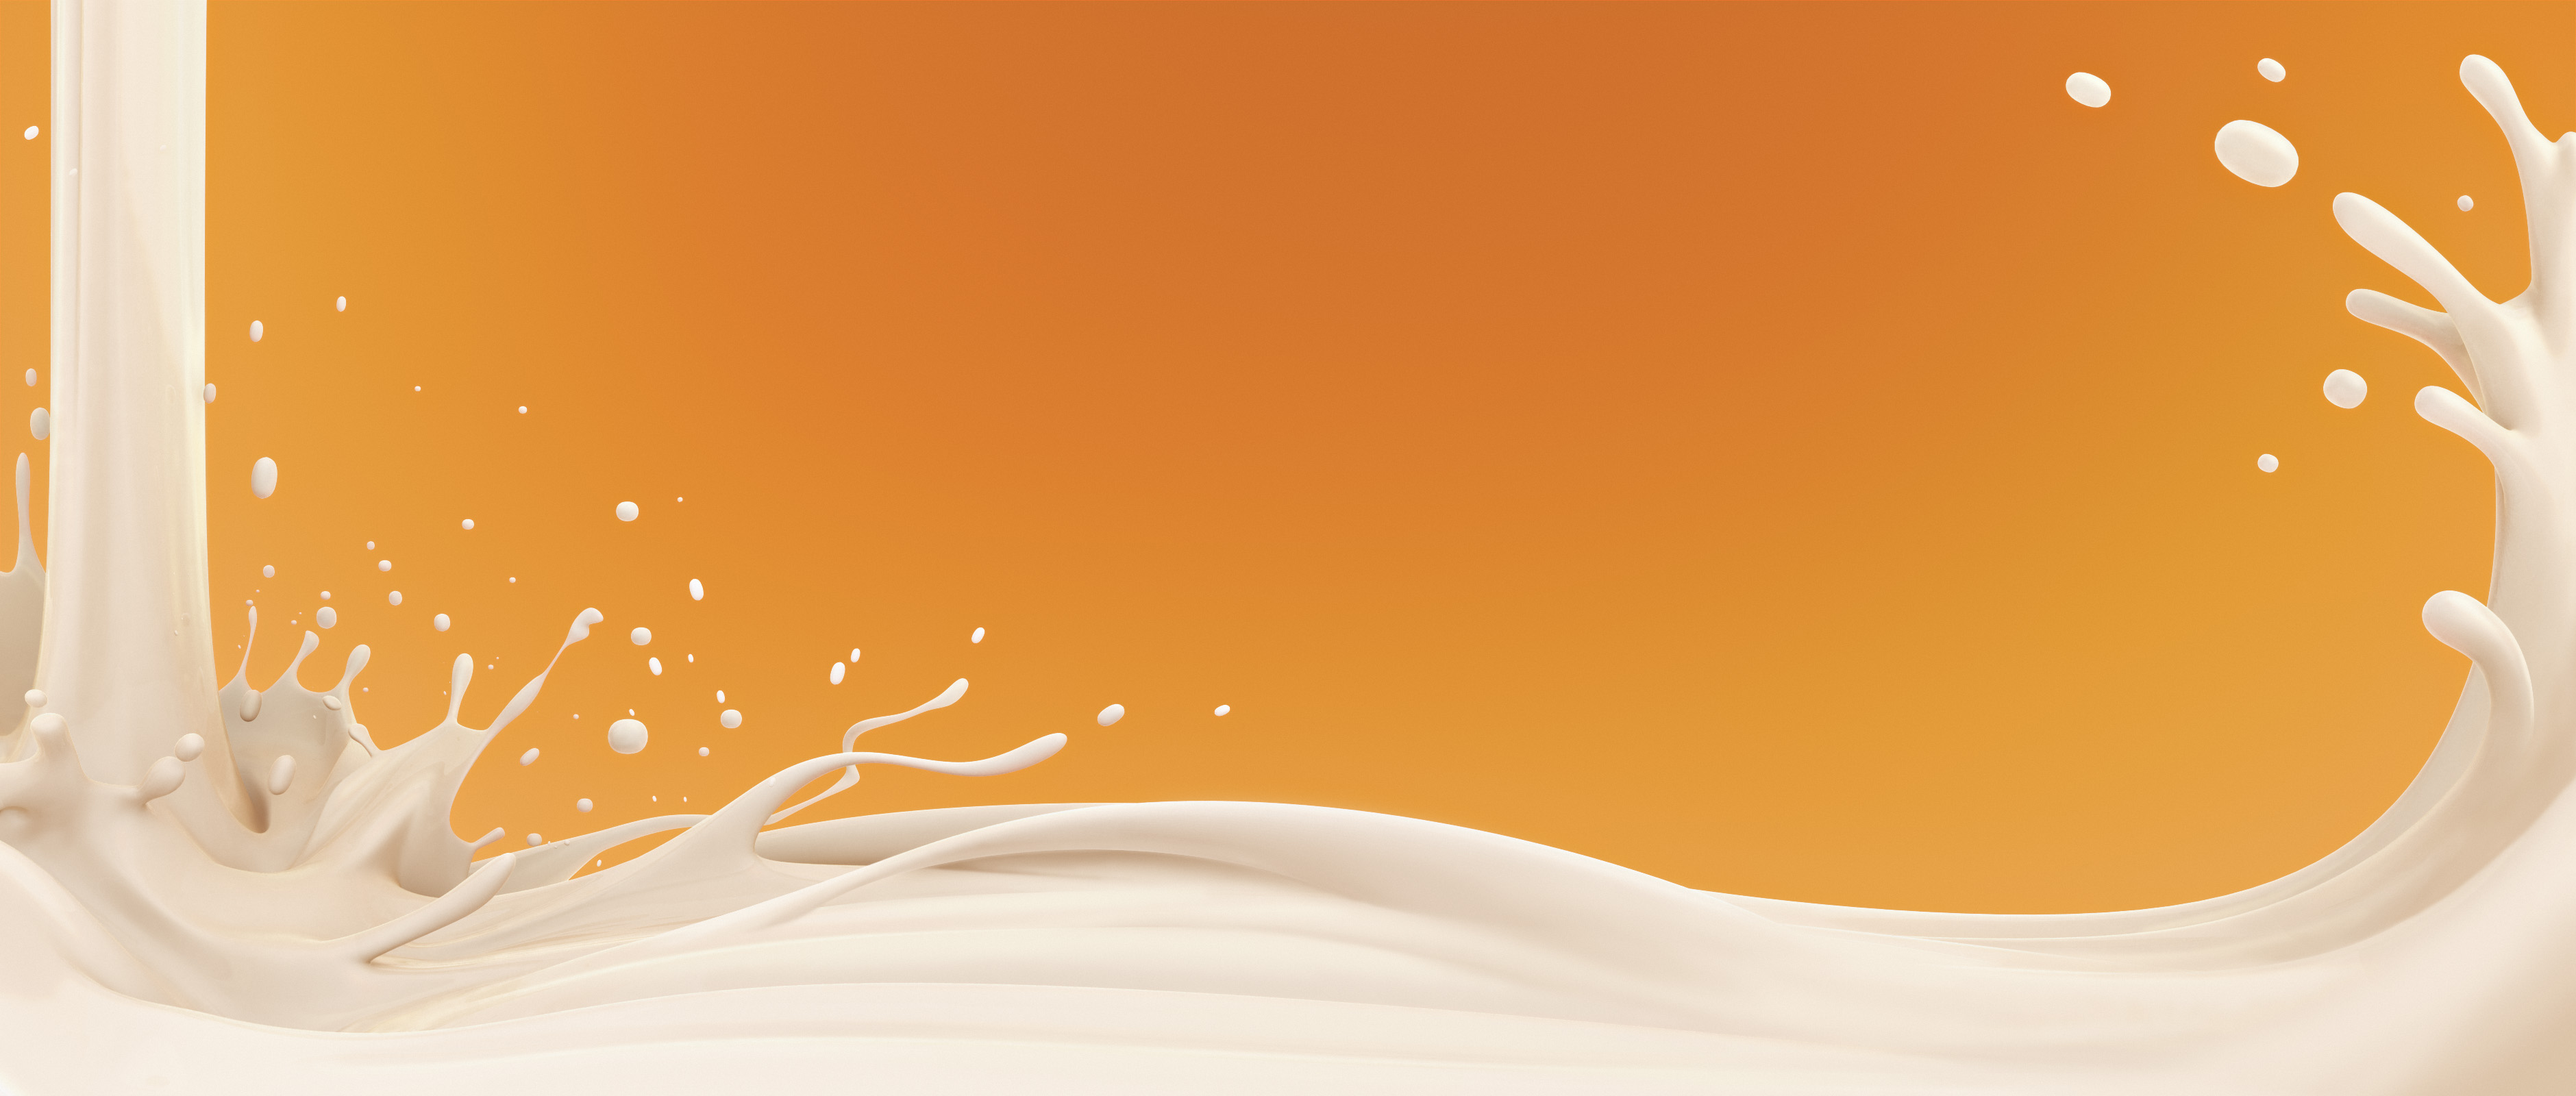 Milk Background Hd - HD Wallpaper 